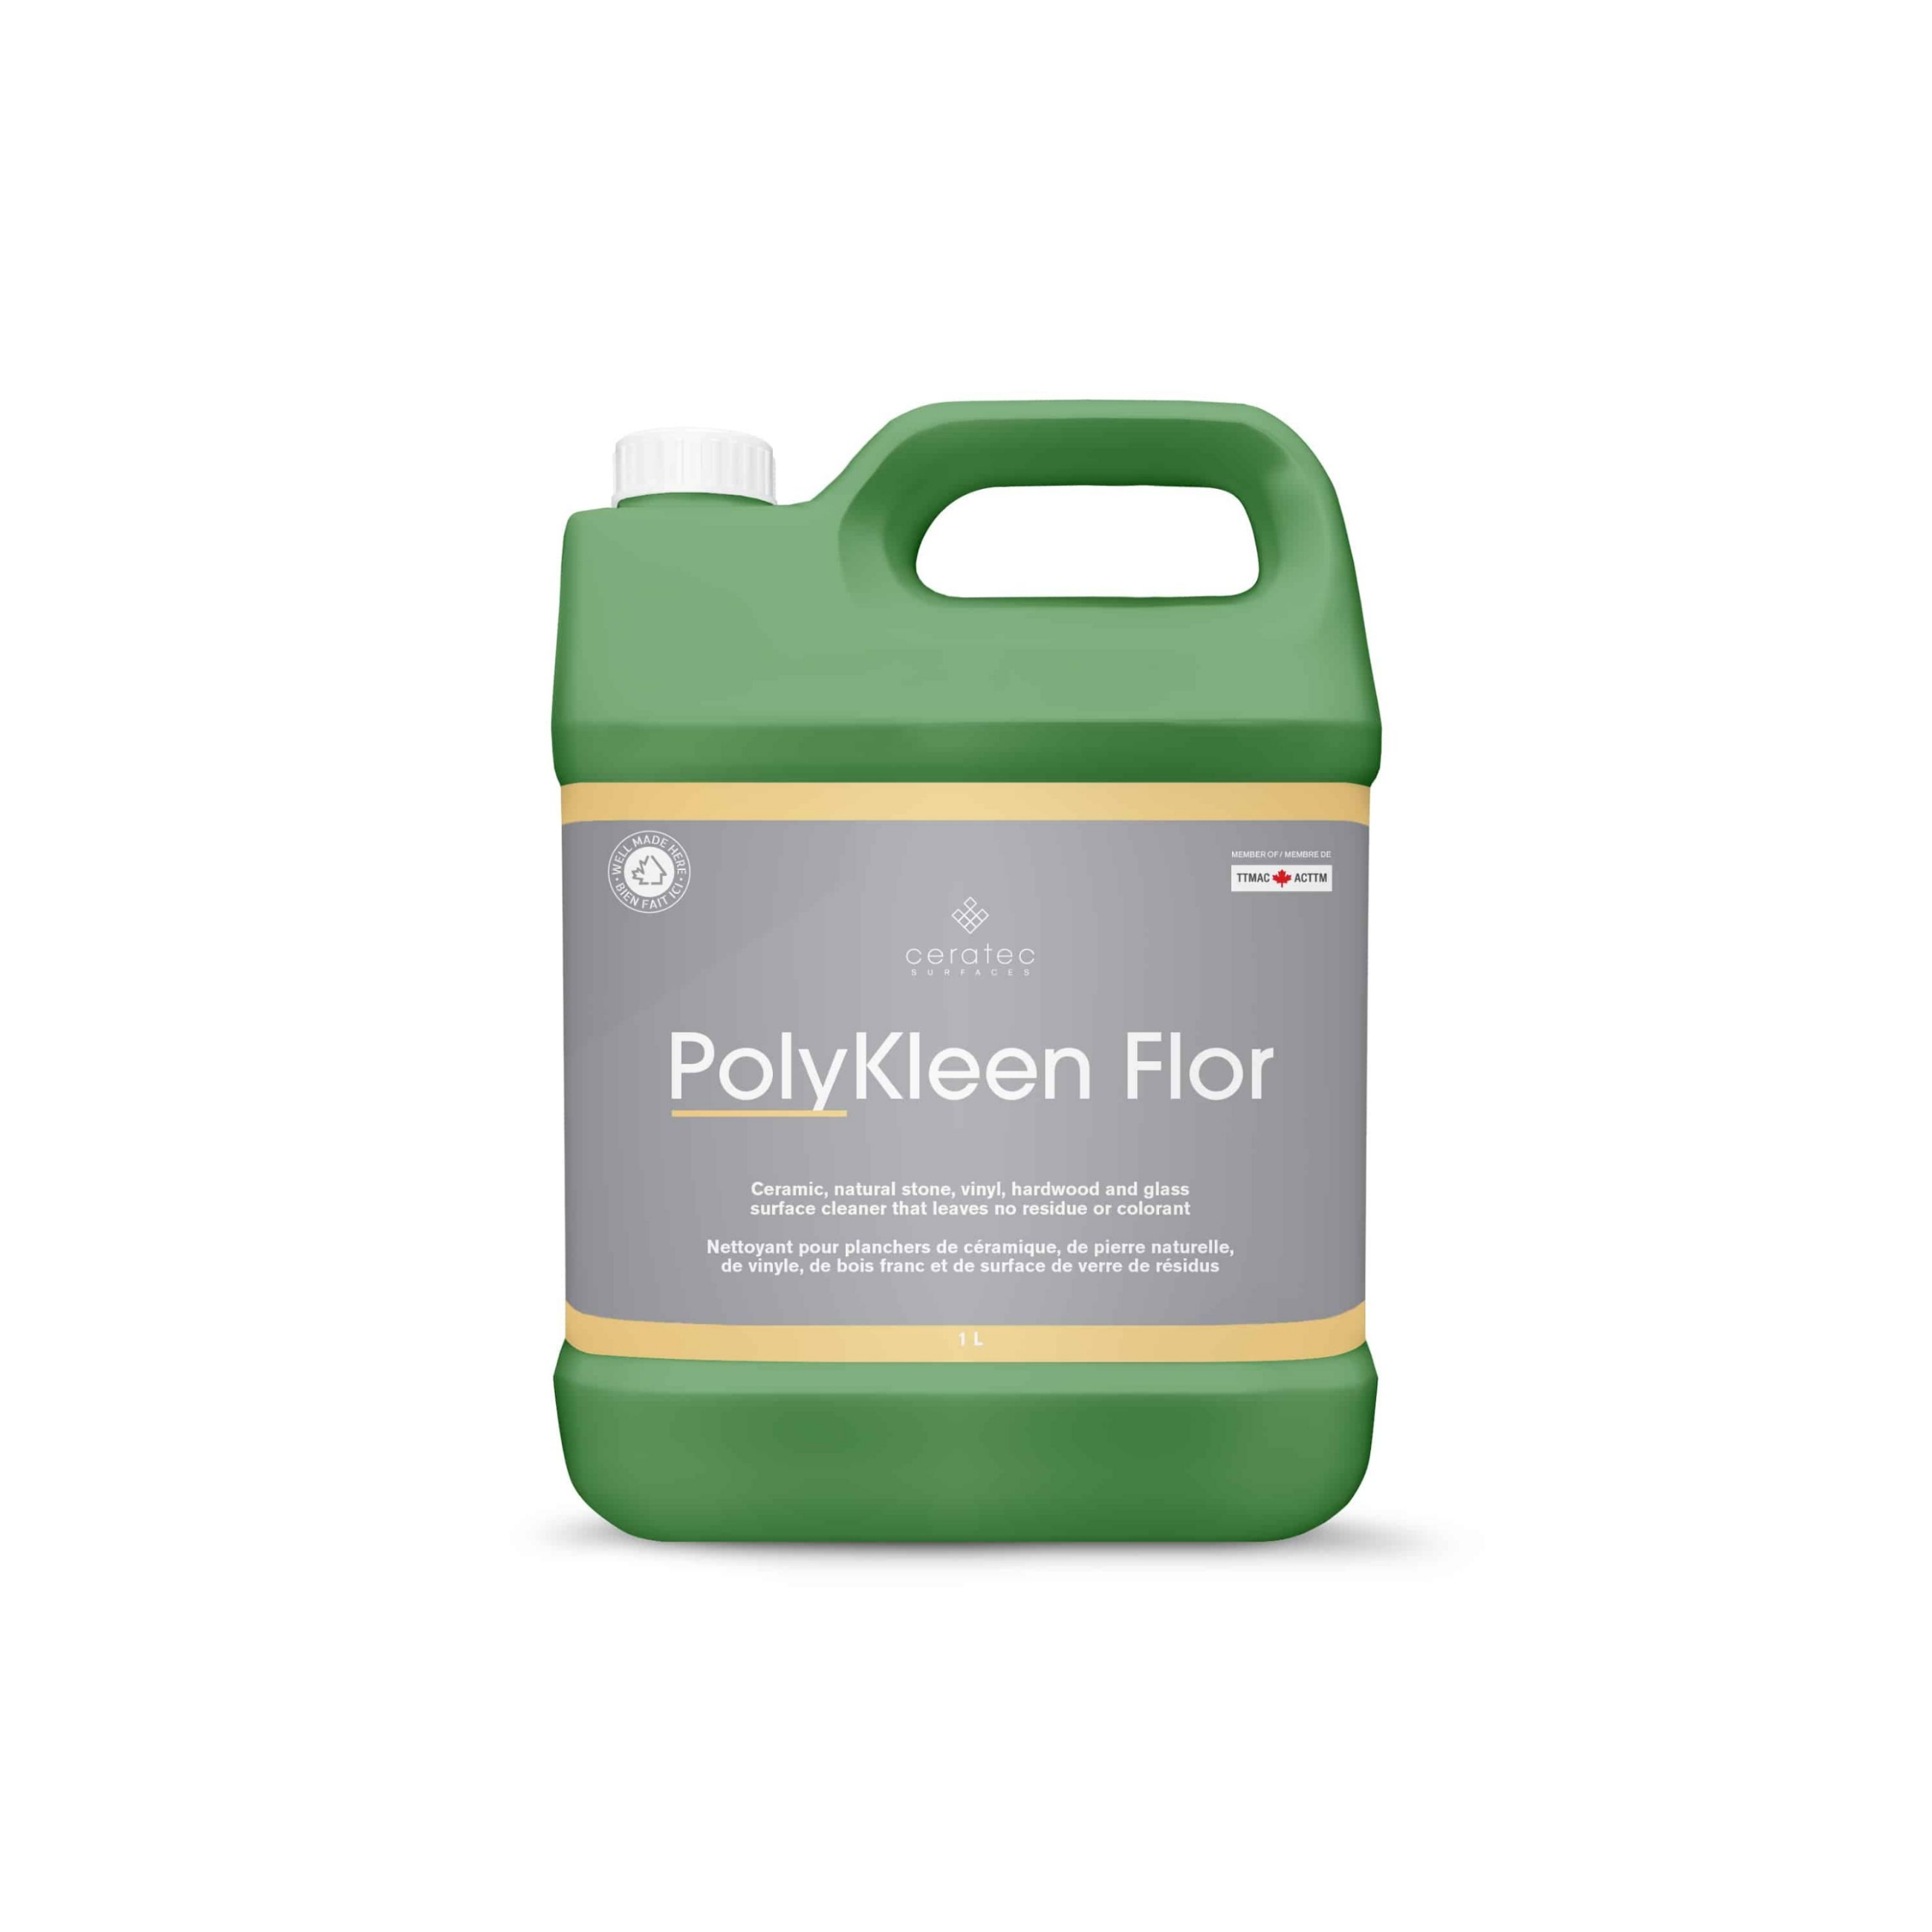 PolyKleen Flor | 0.6" x 0.6"